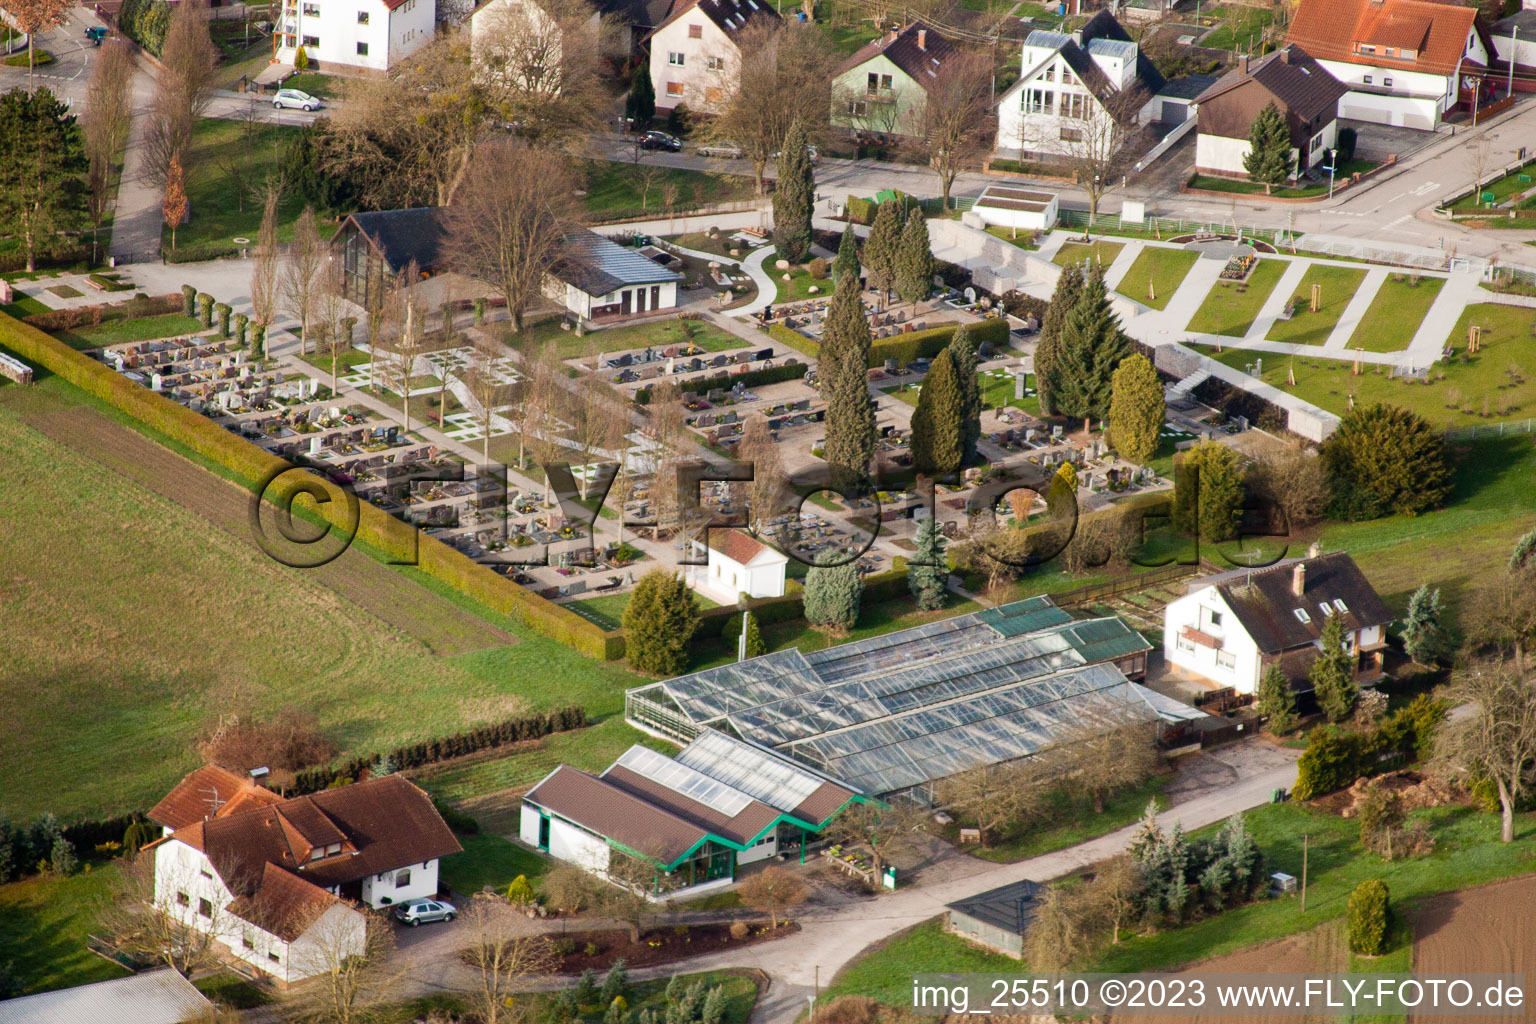 Cemetery in the district Neuburgweier in Rheinstetten in the state Baden-Wuerttemberg, Germany